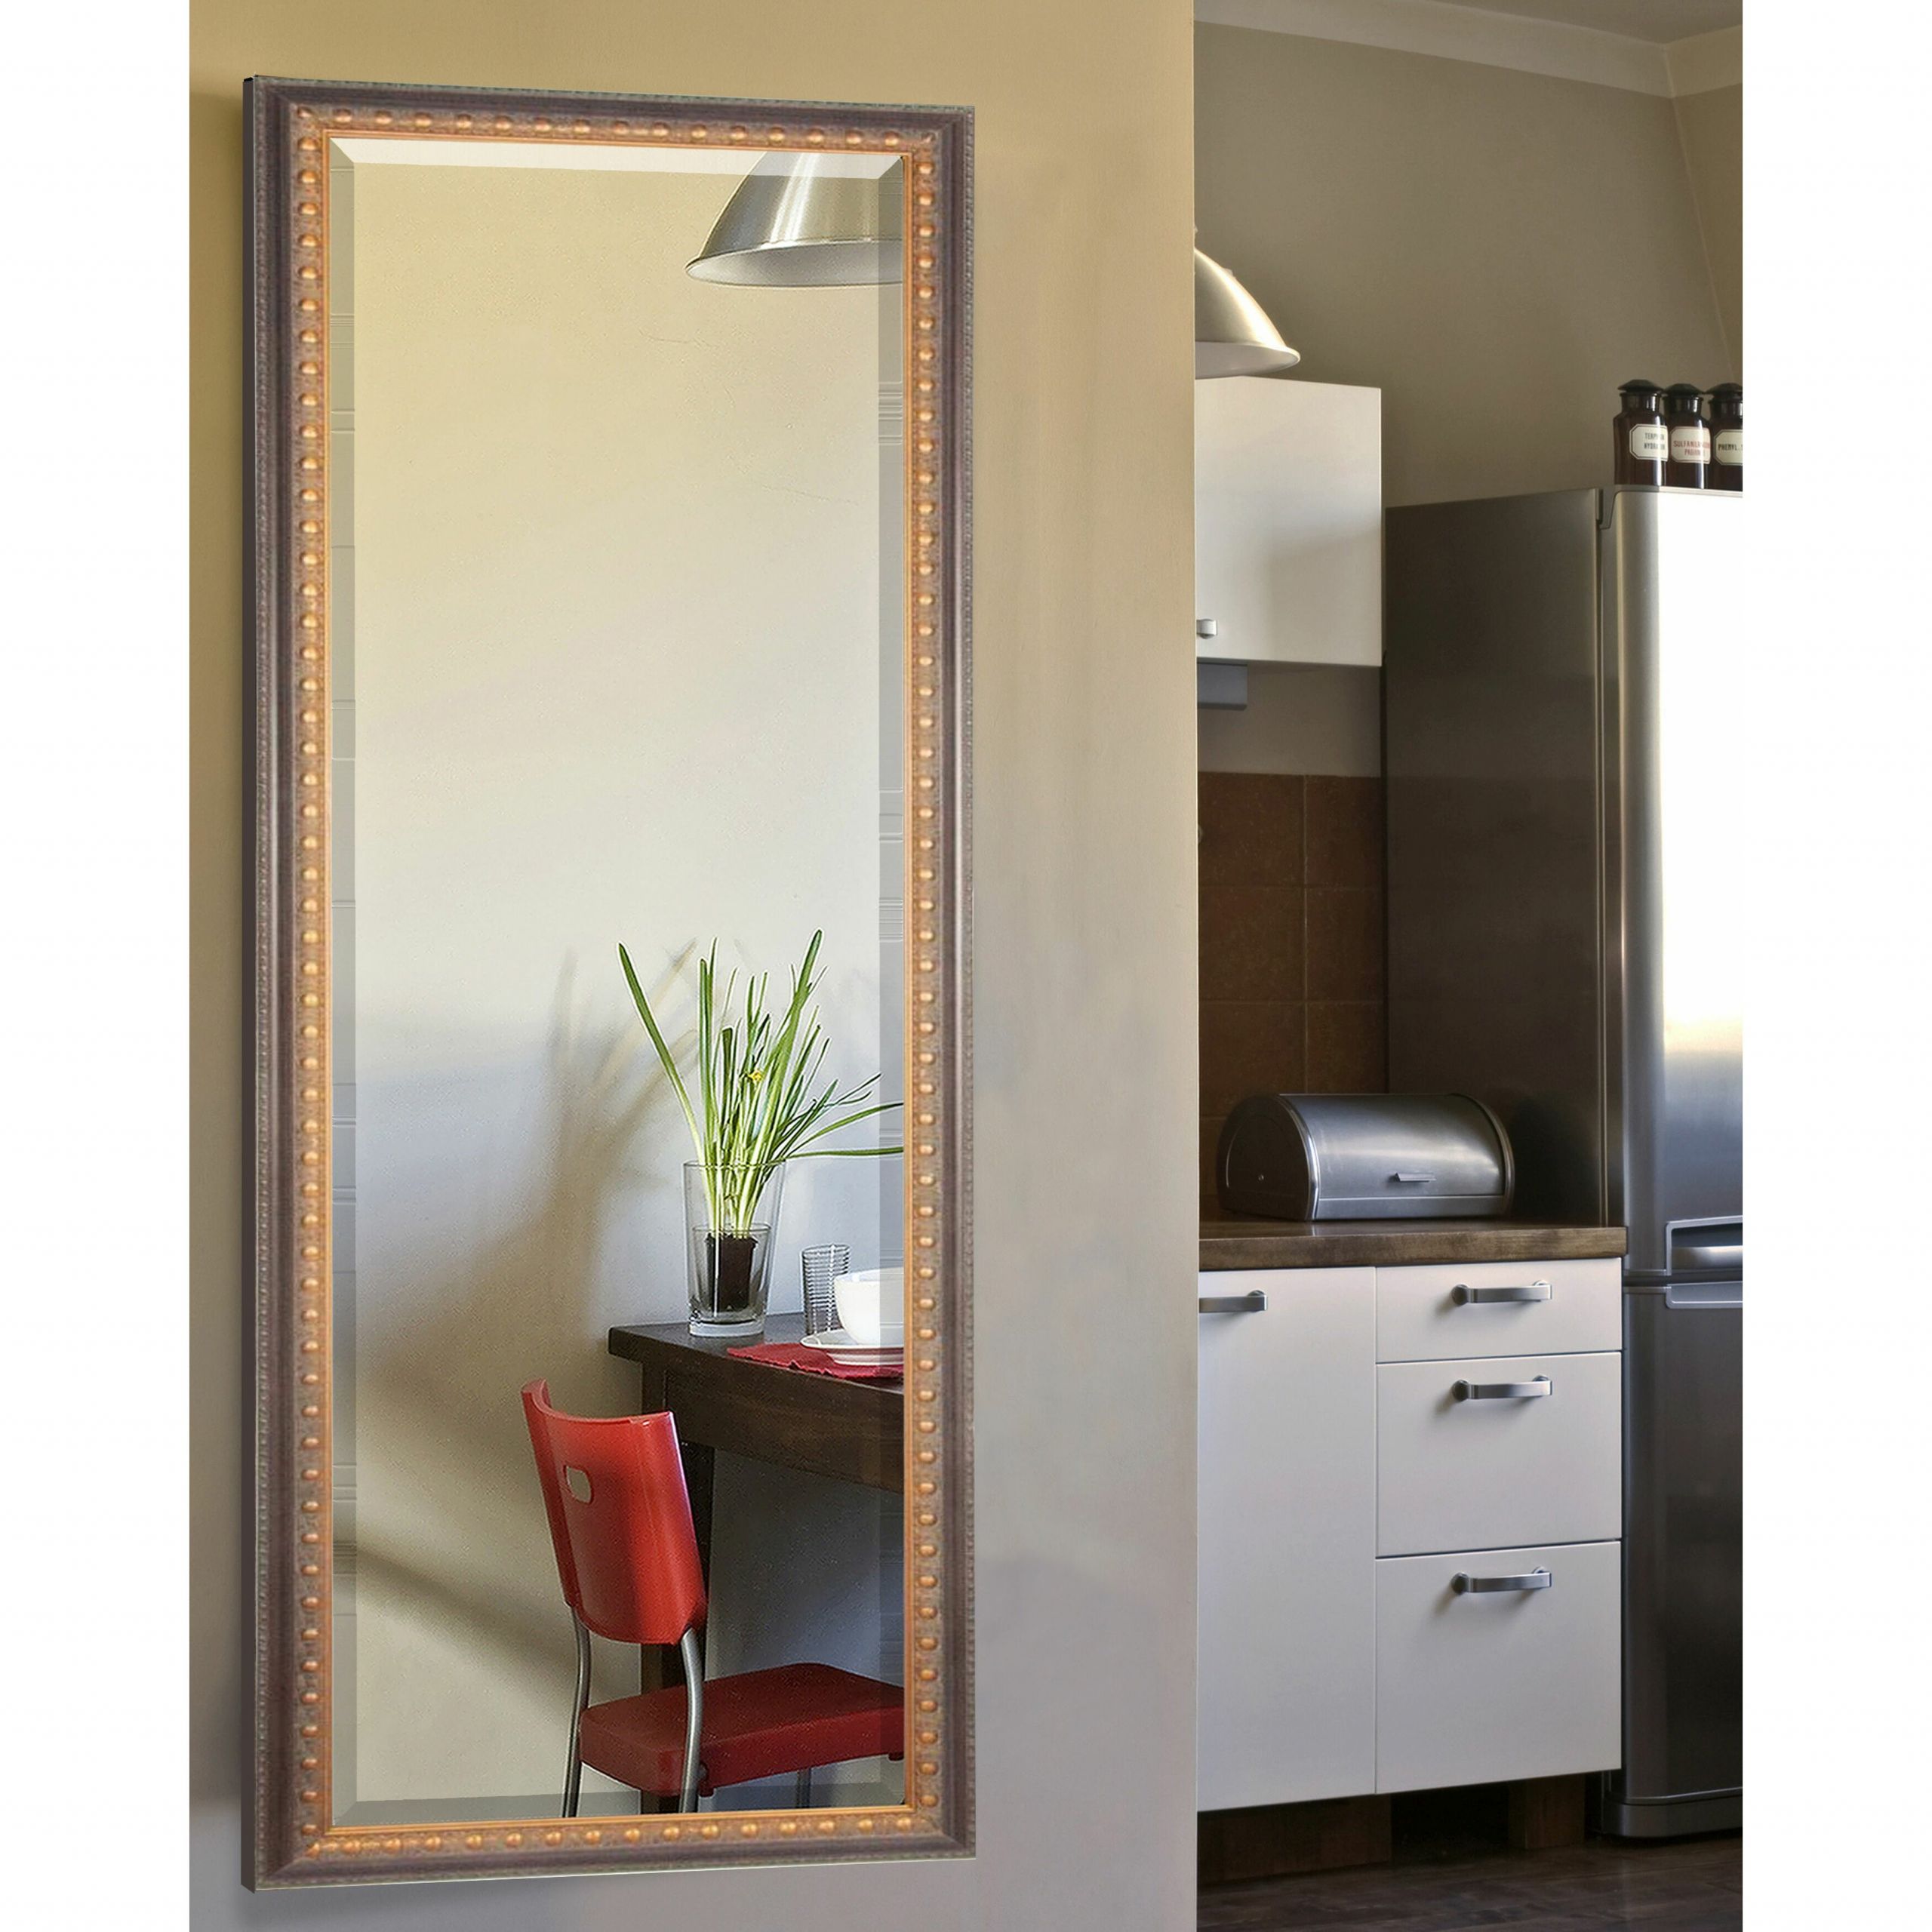 Full Length Bathroom Mirror
 Rayne Mirrors Jovie Jane Roman Copper Bronze Full Length